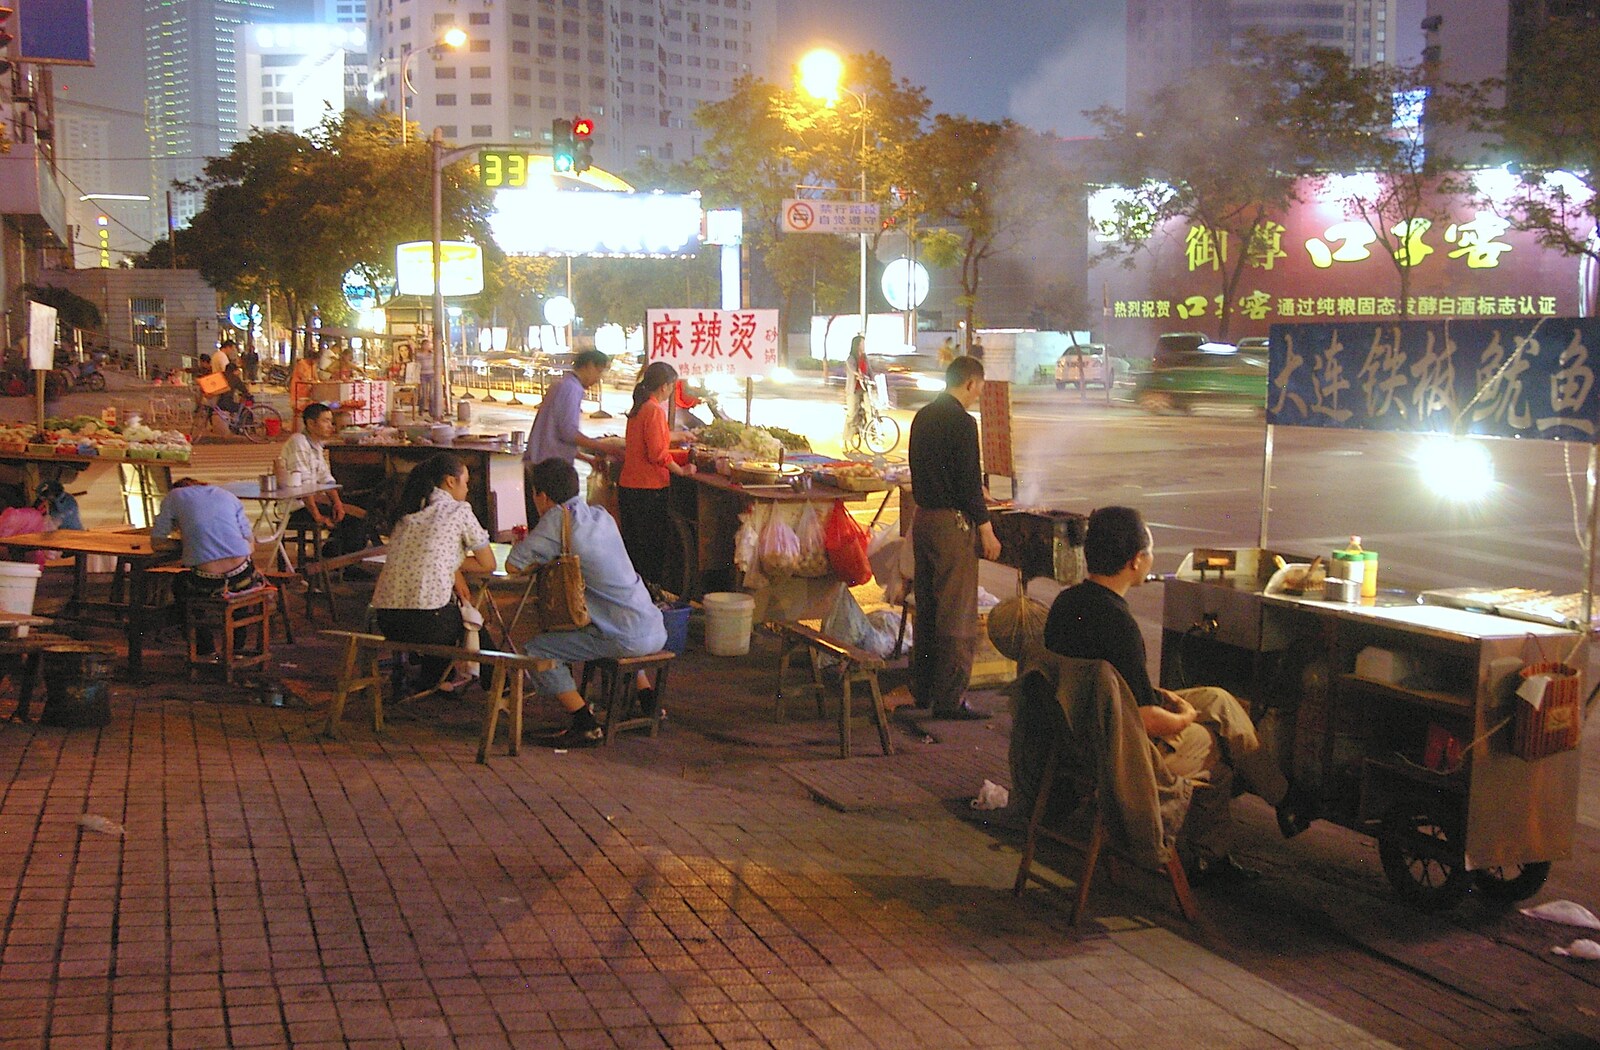 A busy corner for street food from Nanjing by Night, Nanjing, Jiangsu Province, China - 4th October 2006